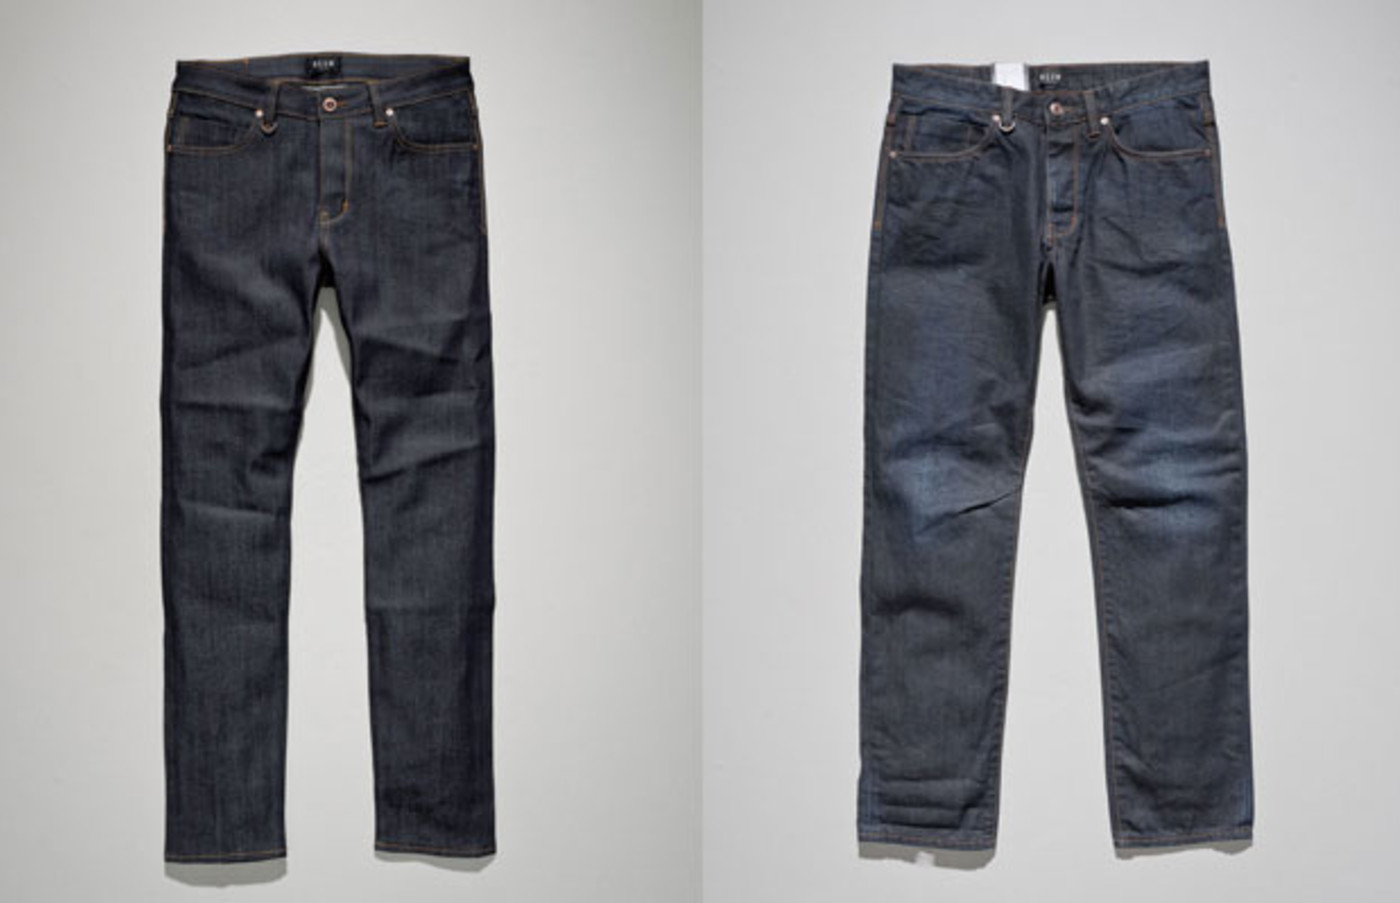 NEUW Denim Gives Jeans A Vintage Revision | Complex